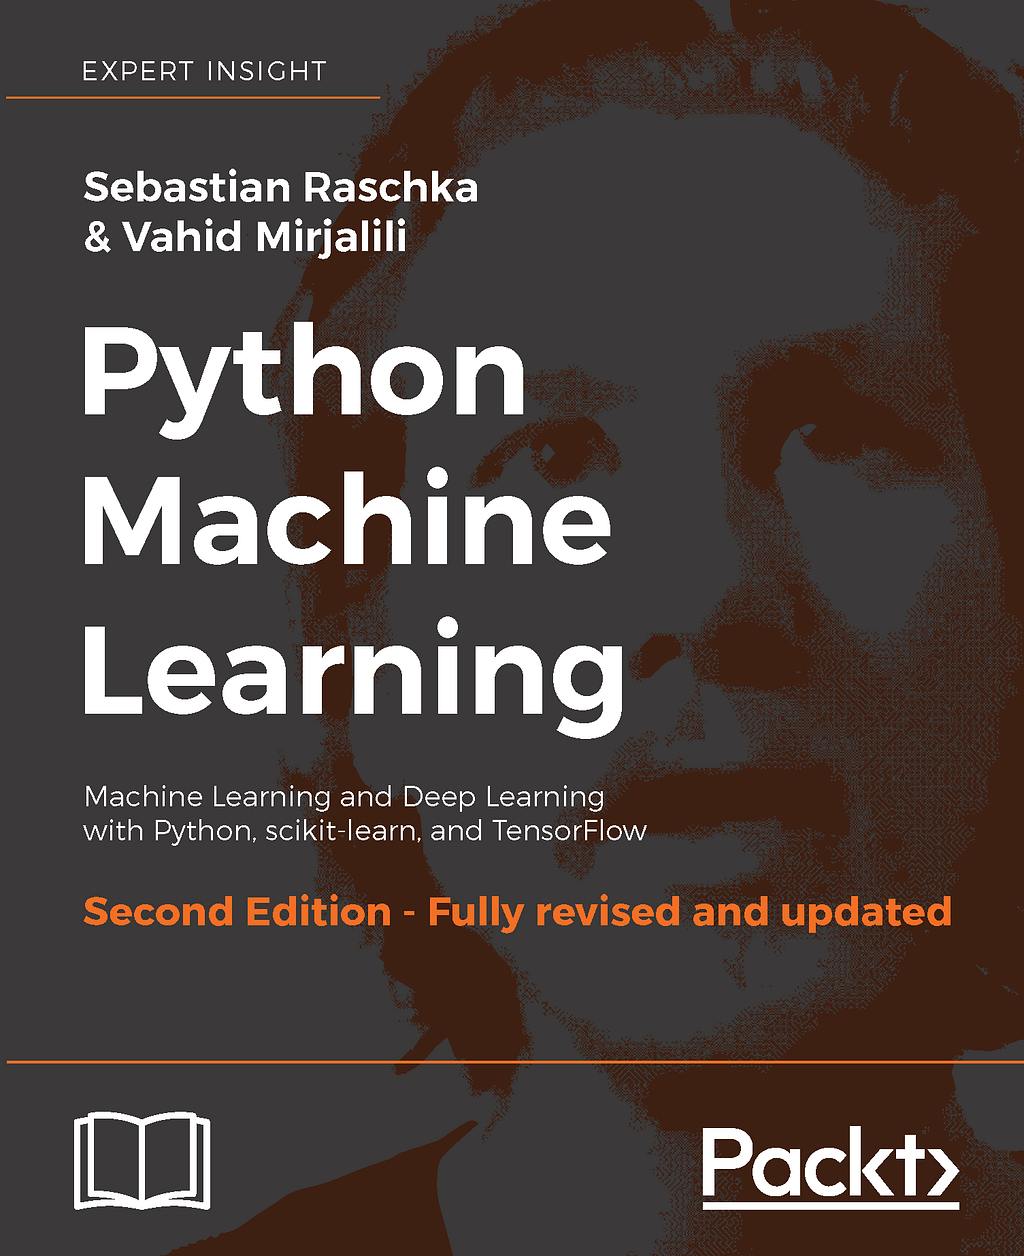 Python Machine Learning book